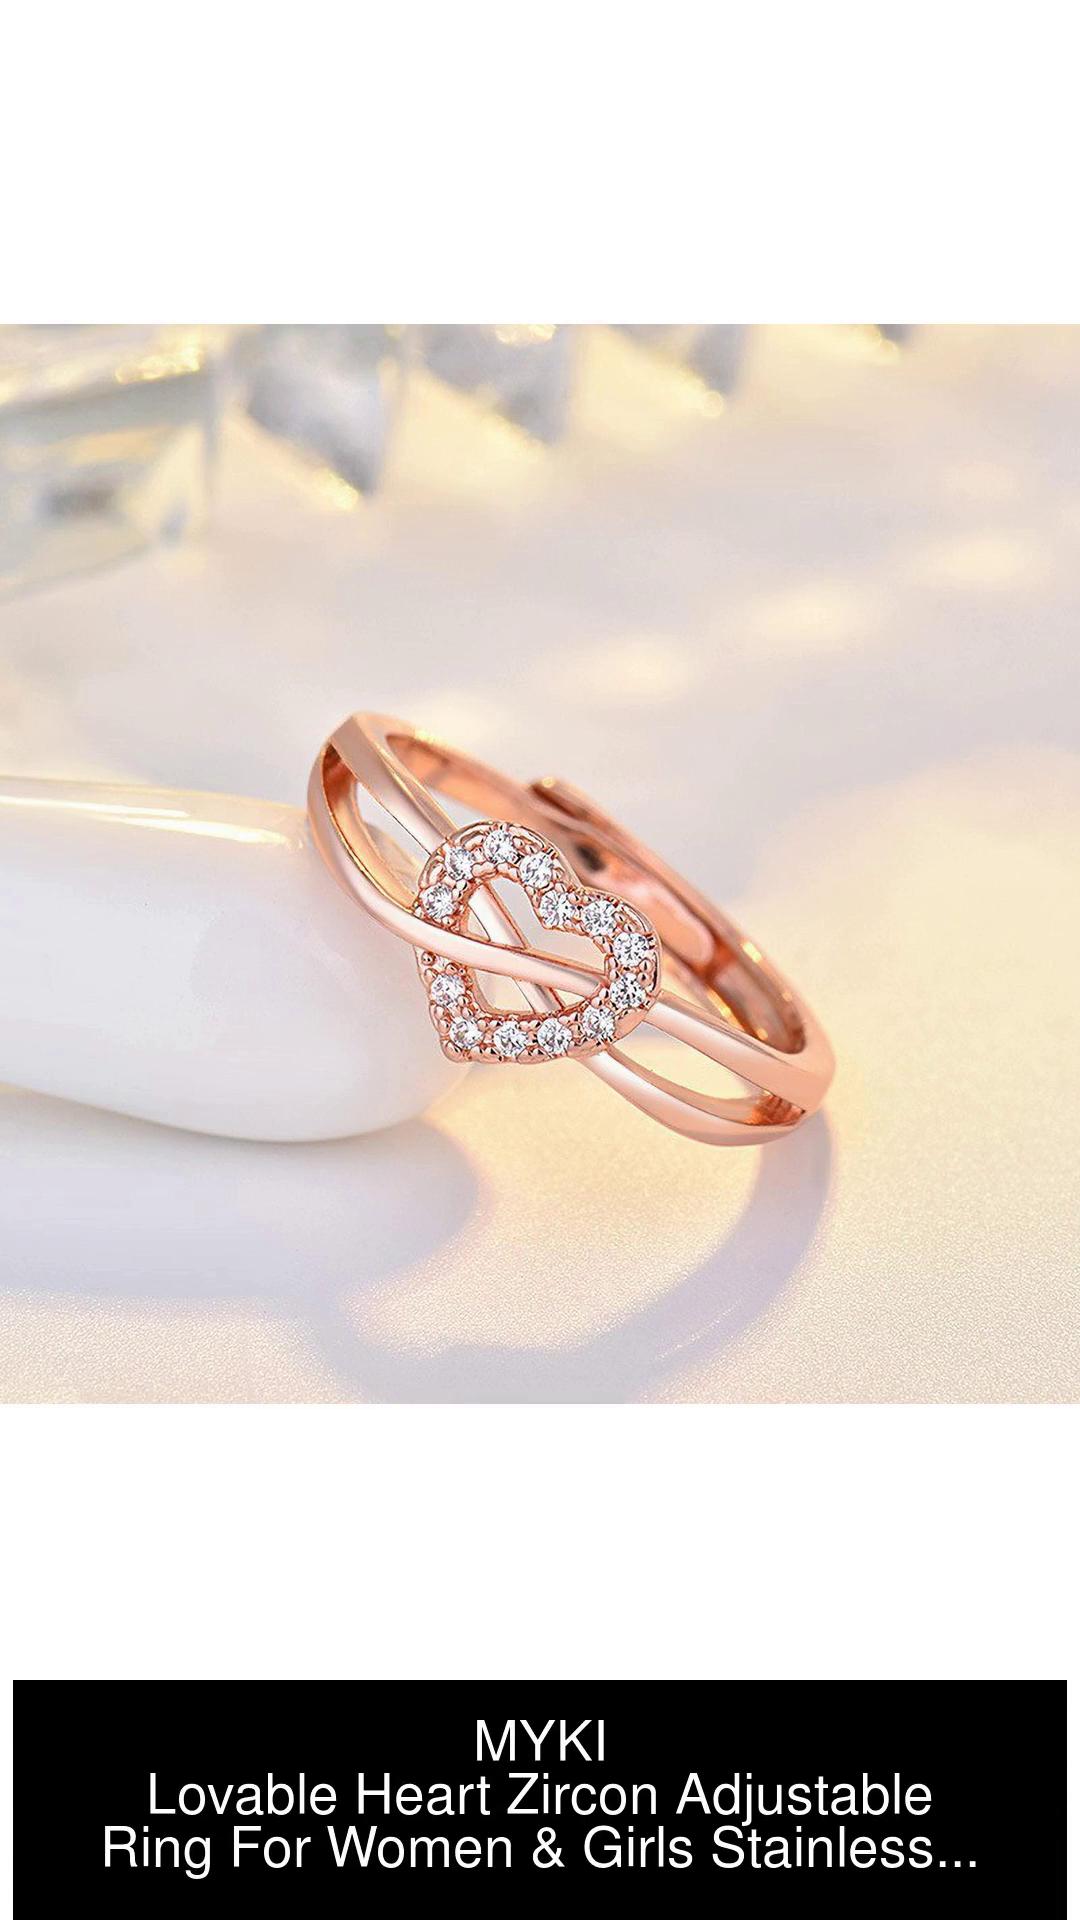 MYKI Lovable Heart Zircon Adjustable Ring For Women & Girls Stainless Steel  Swarovski Zirconia Gold Plated Ring Price in India - Buy MYKI Lovable Heart  Zircon Adjustable Ring For Women & Girls